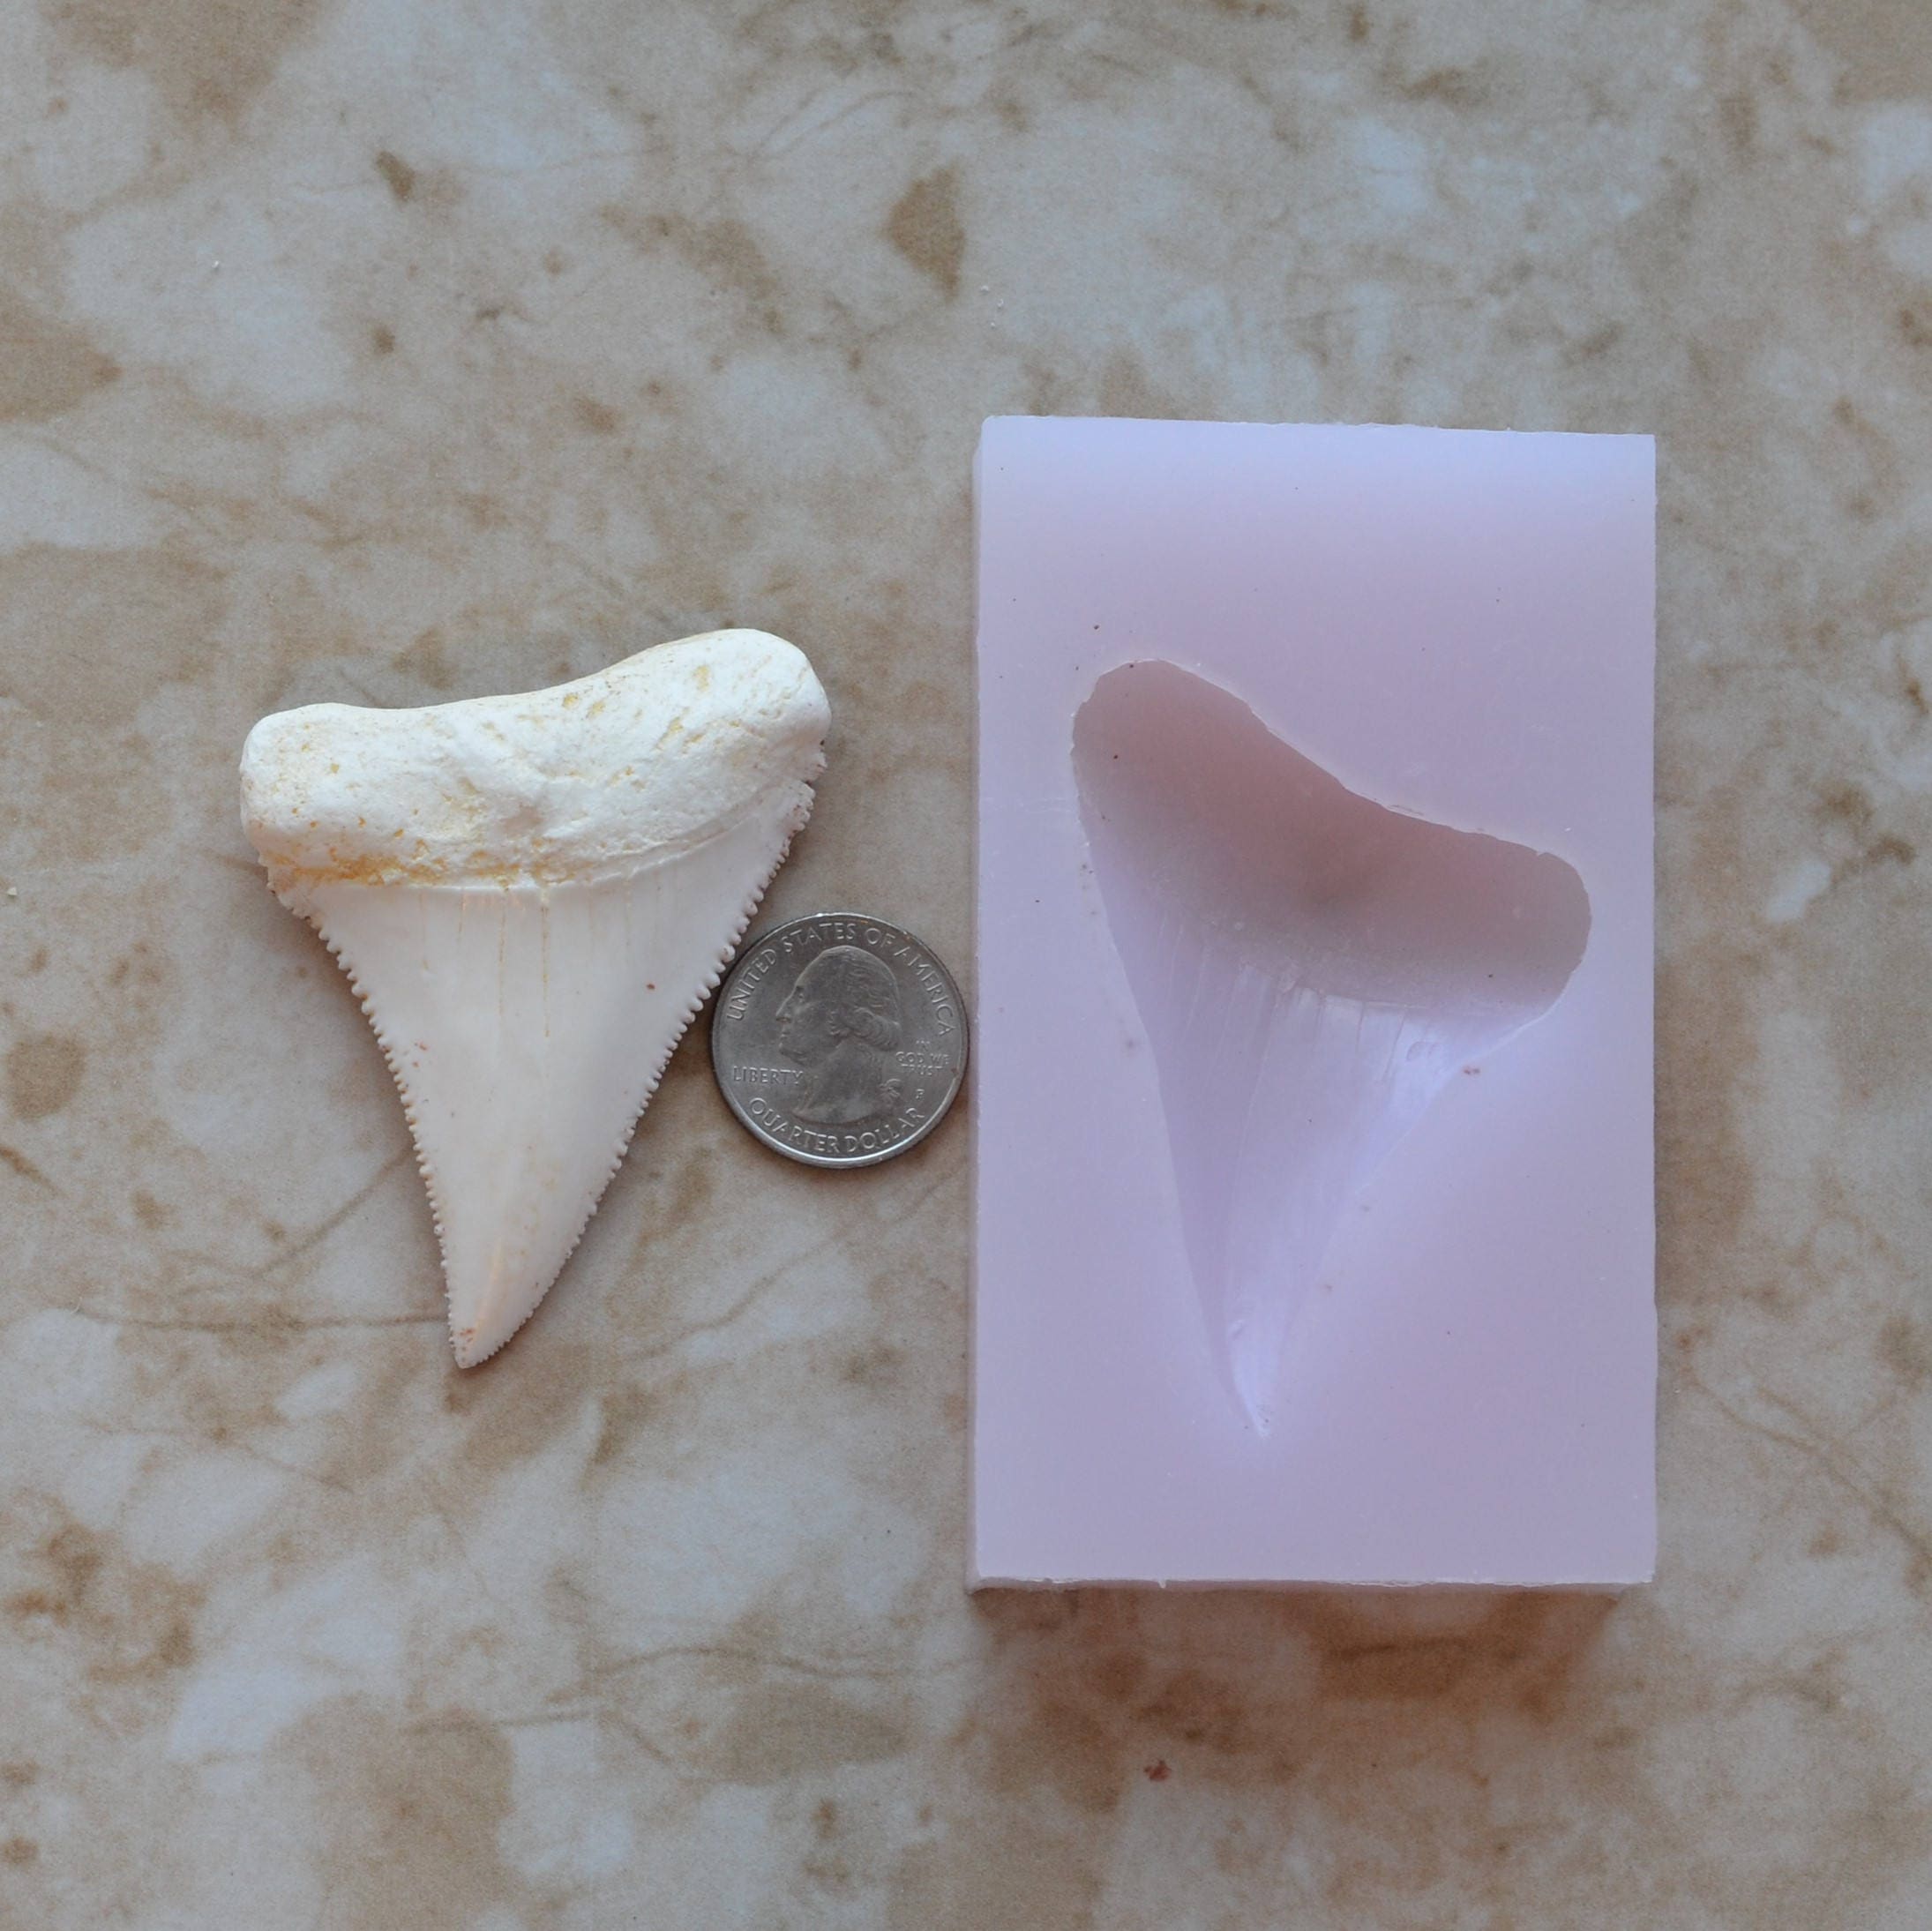 Gummy Shark With Teeth Embeds 56 Cavity Silicone Mold 8006